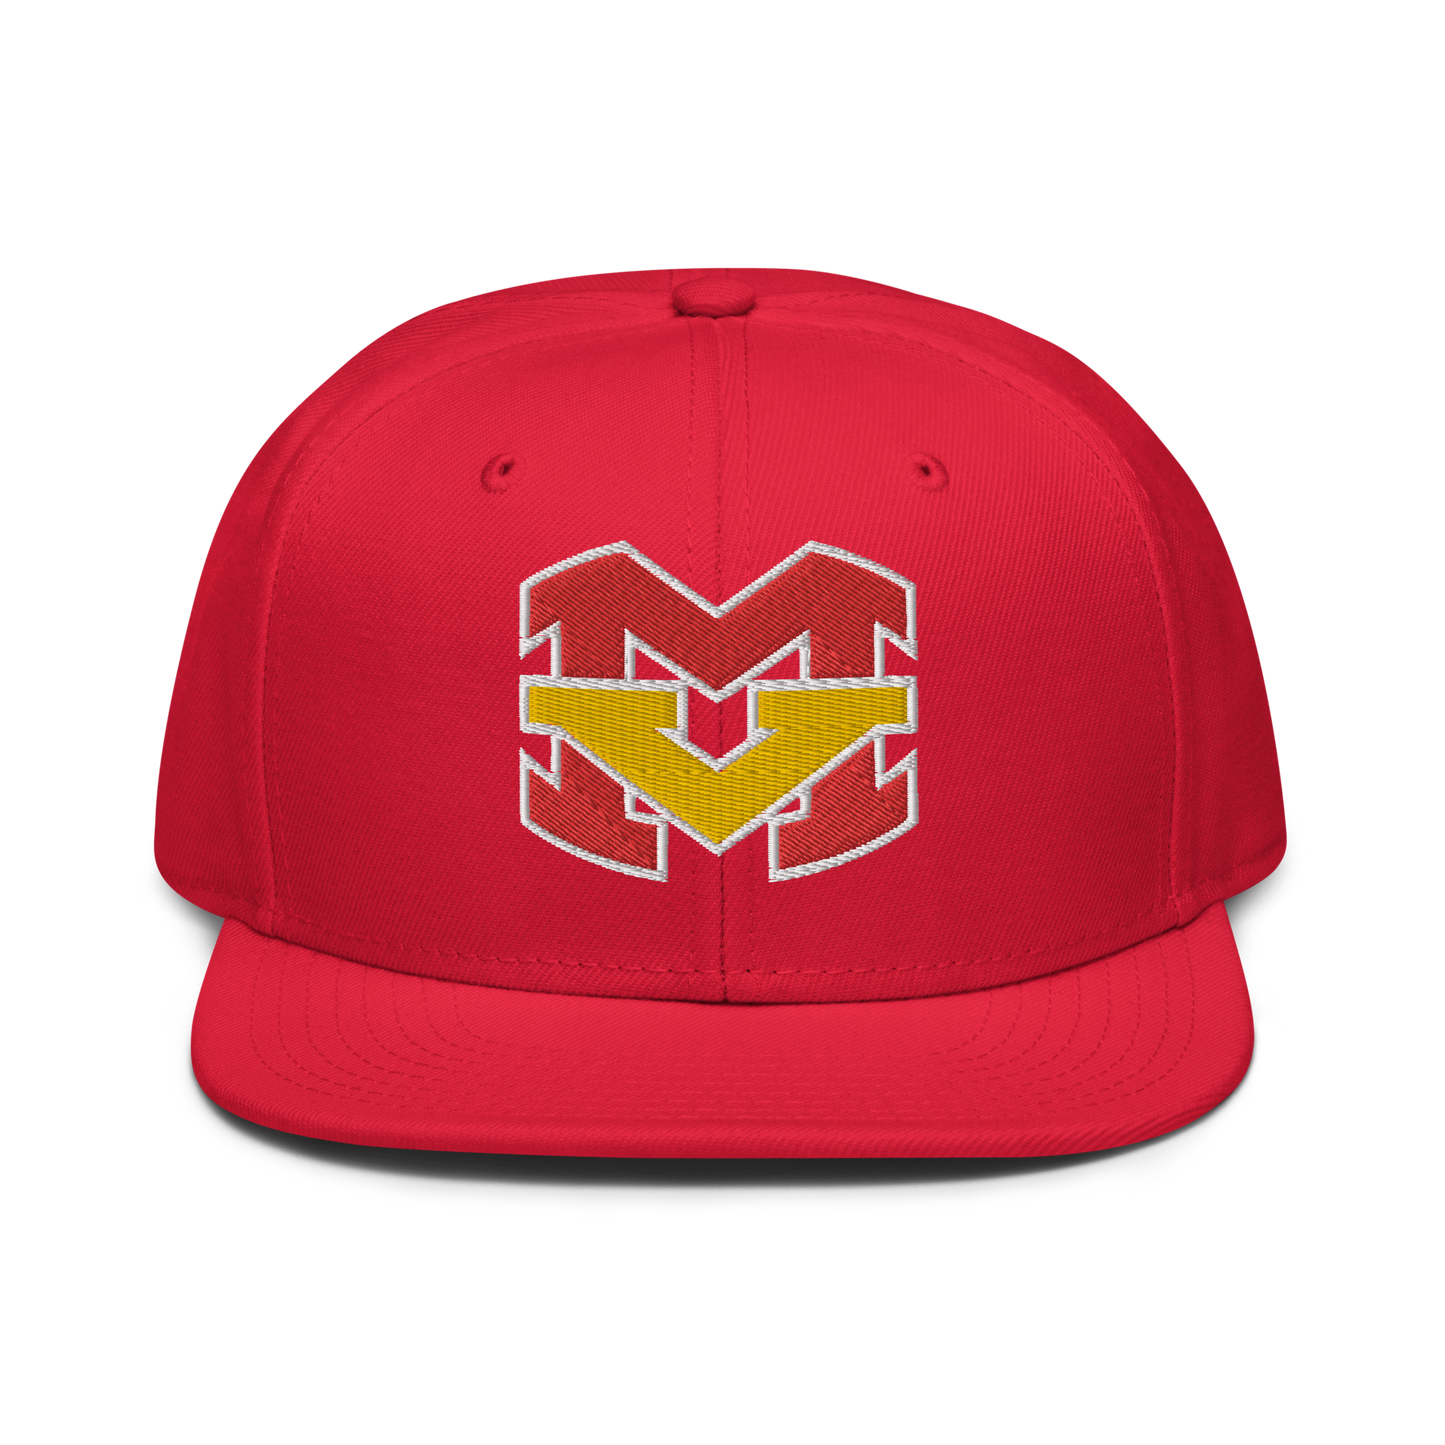 Mission Viejo Snapback Hat